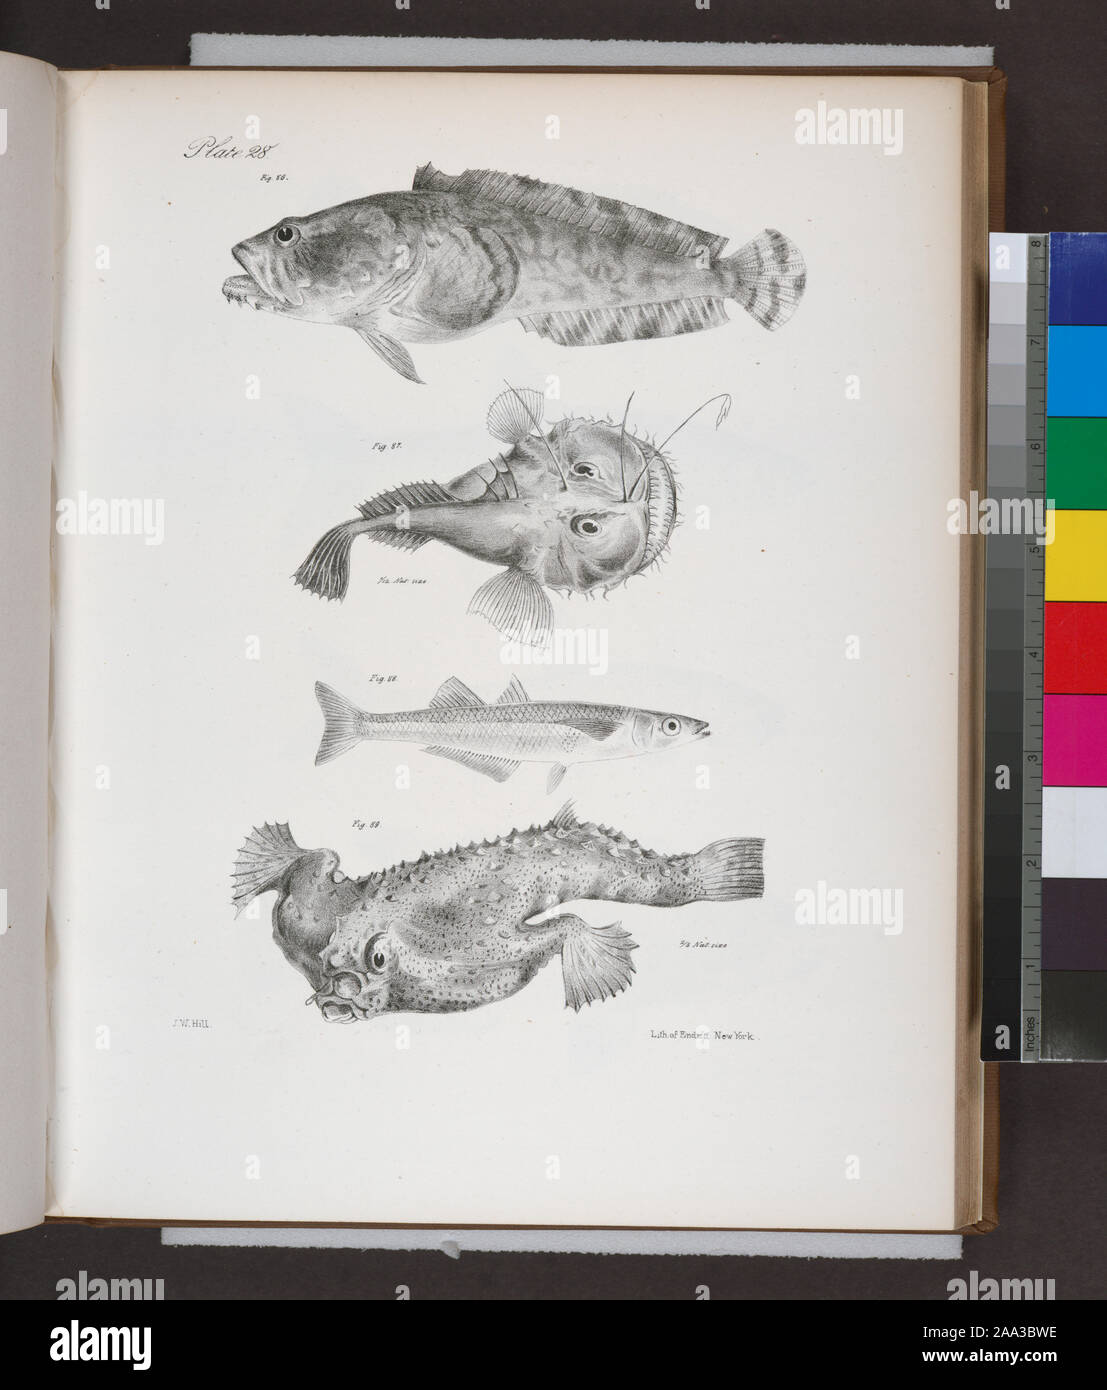 86. The Comon Toad-fish (Batrachus tau). 87. The American Angler (Lophius americanus). 88. The Dotted Silverside (Atherina notata). 89. The Short-nosed Malthæa (Malthæa nasuta).; 86. The Comon Toad-fish (Batrachus tau). 87. The American Angler (Lophius americanus). 88. The Dotted Silverside (Atherina notata). 89. The Short-nosed Malthæa (Malthæa nasuta). Stock Photo